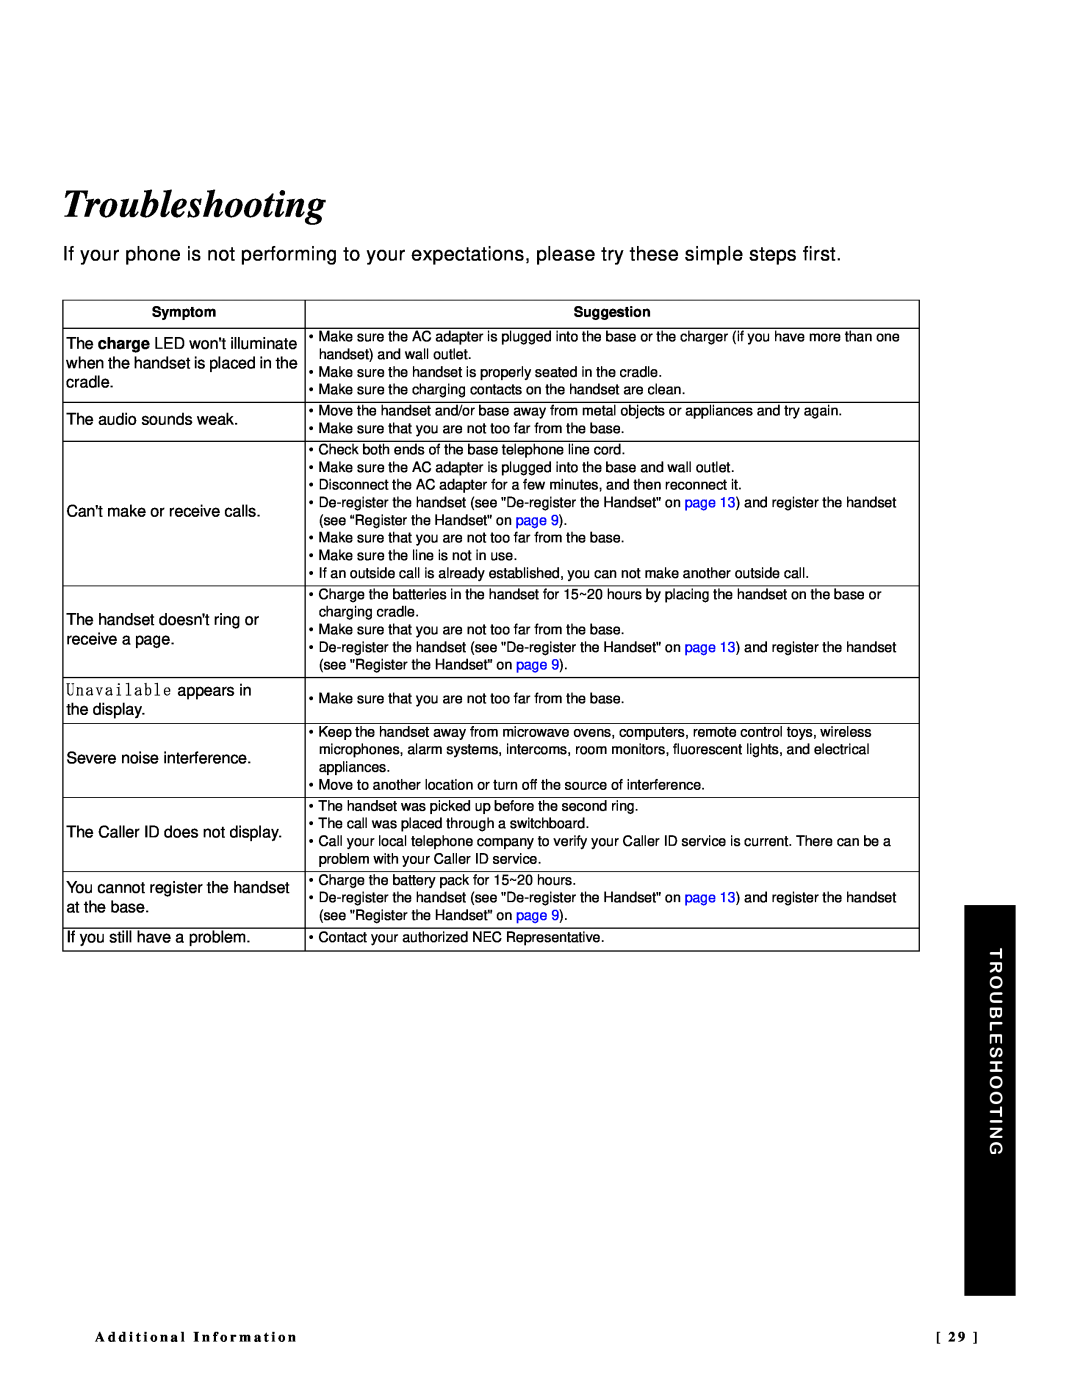 NEC DTR-IR-2 user manual Troubleshooting 